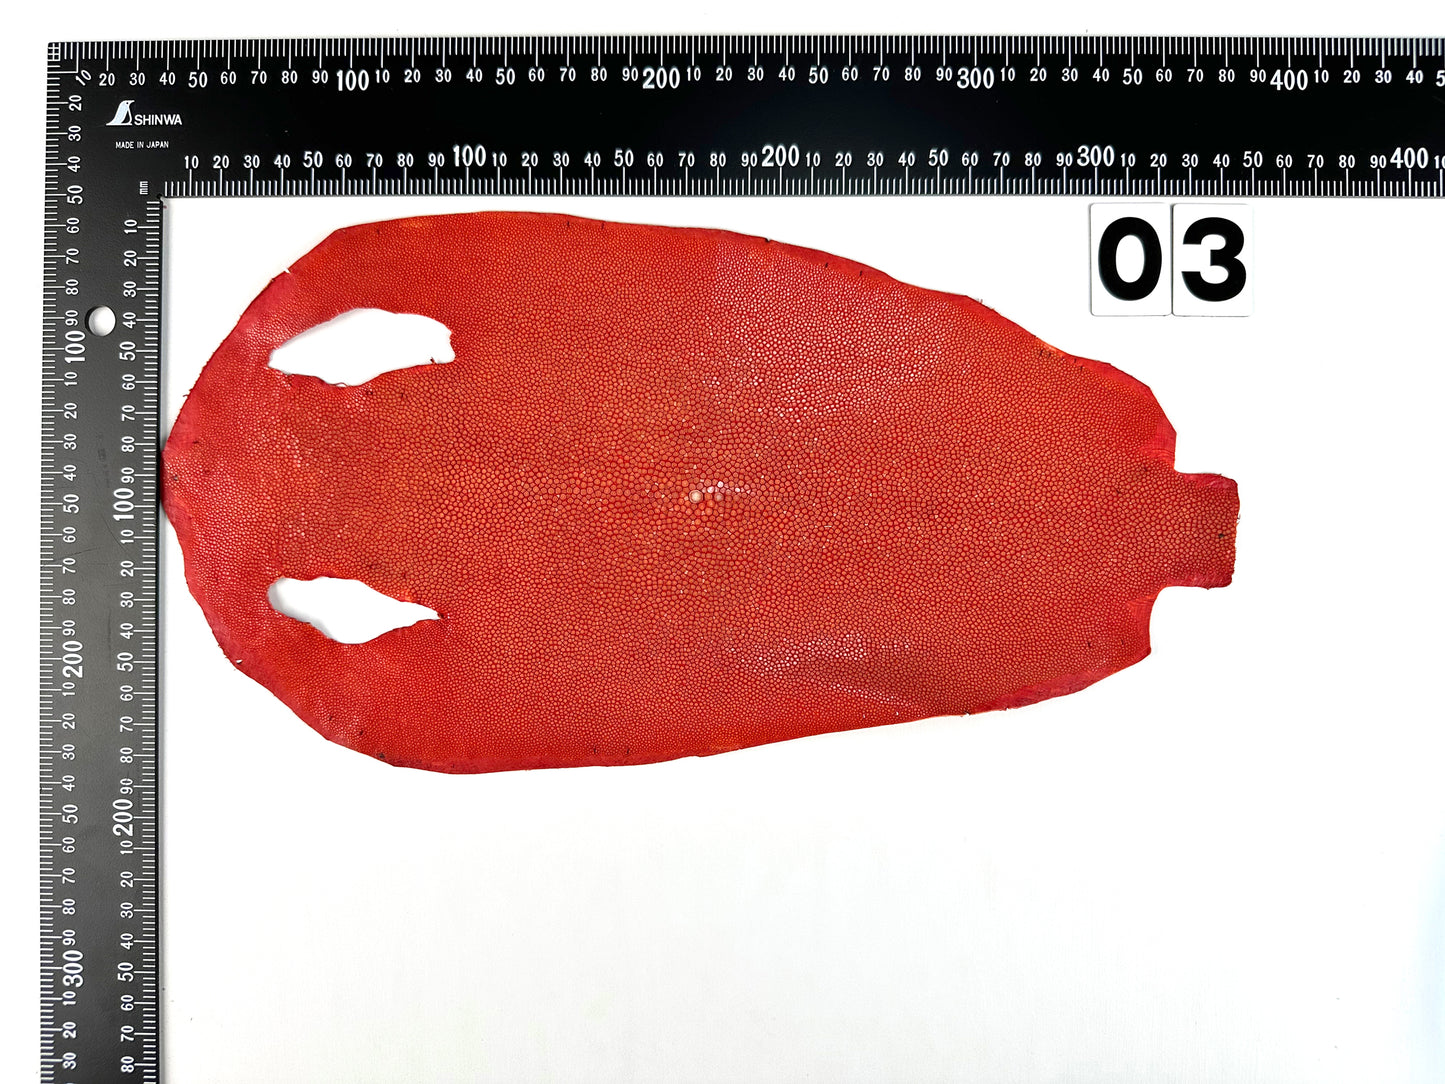 Stingray leather 9inch Ginsuri #5 Red